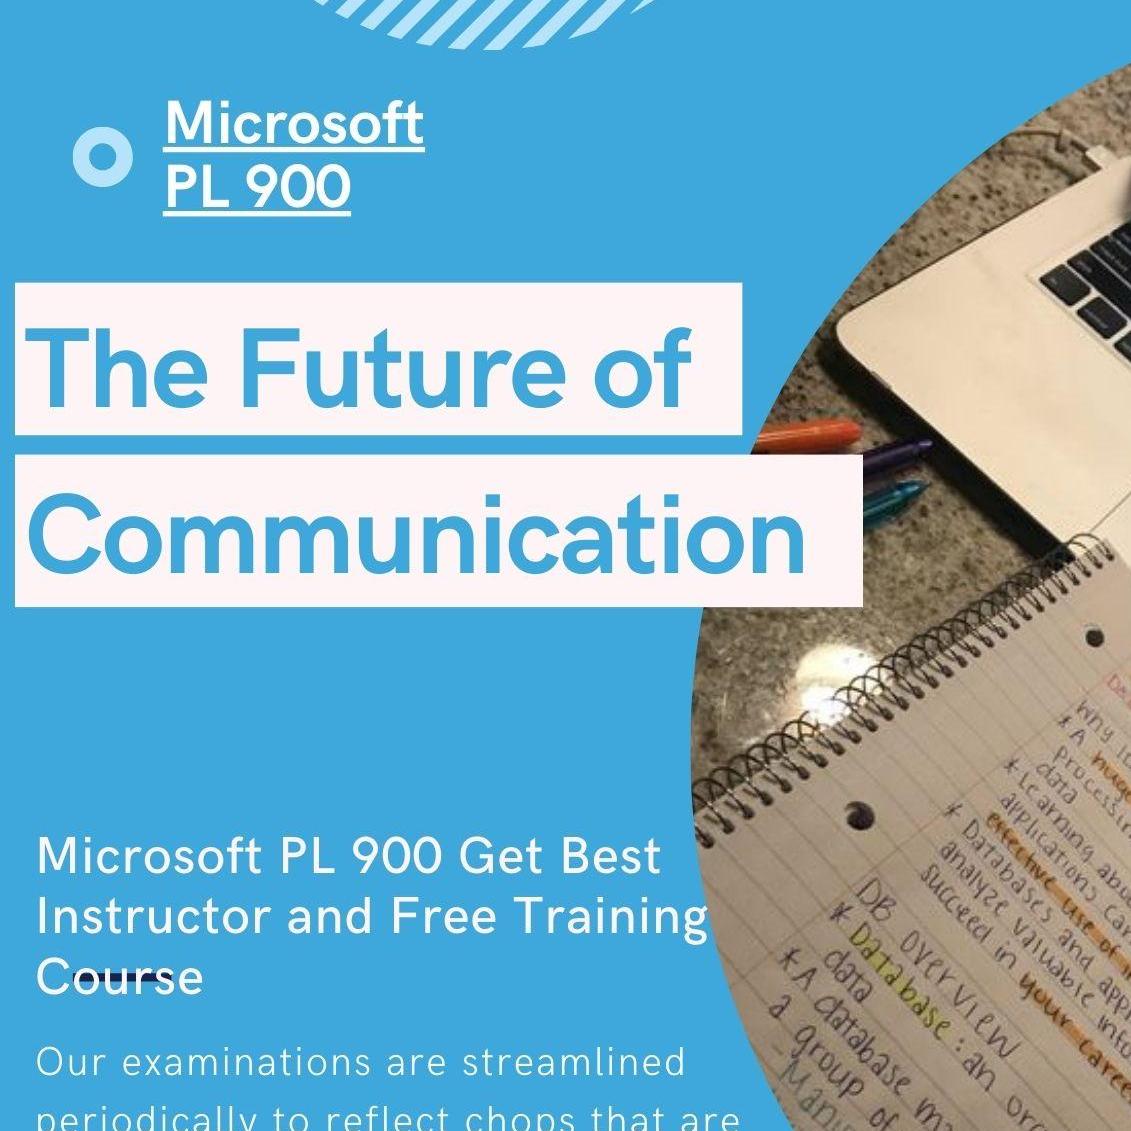 Microsoft PL900